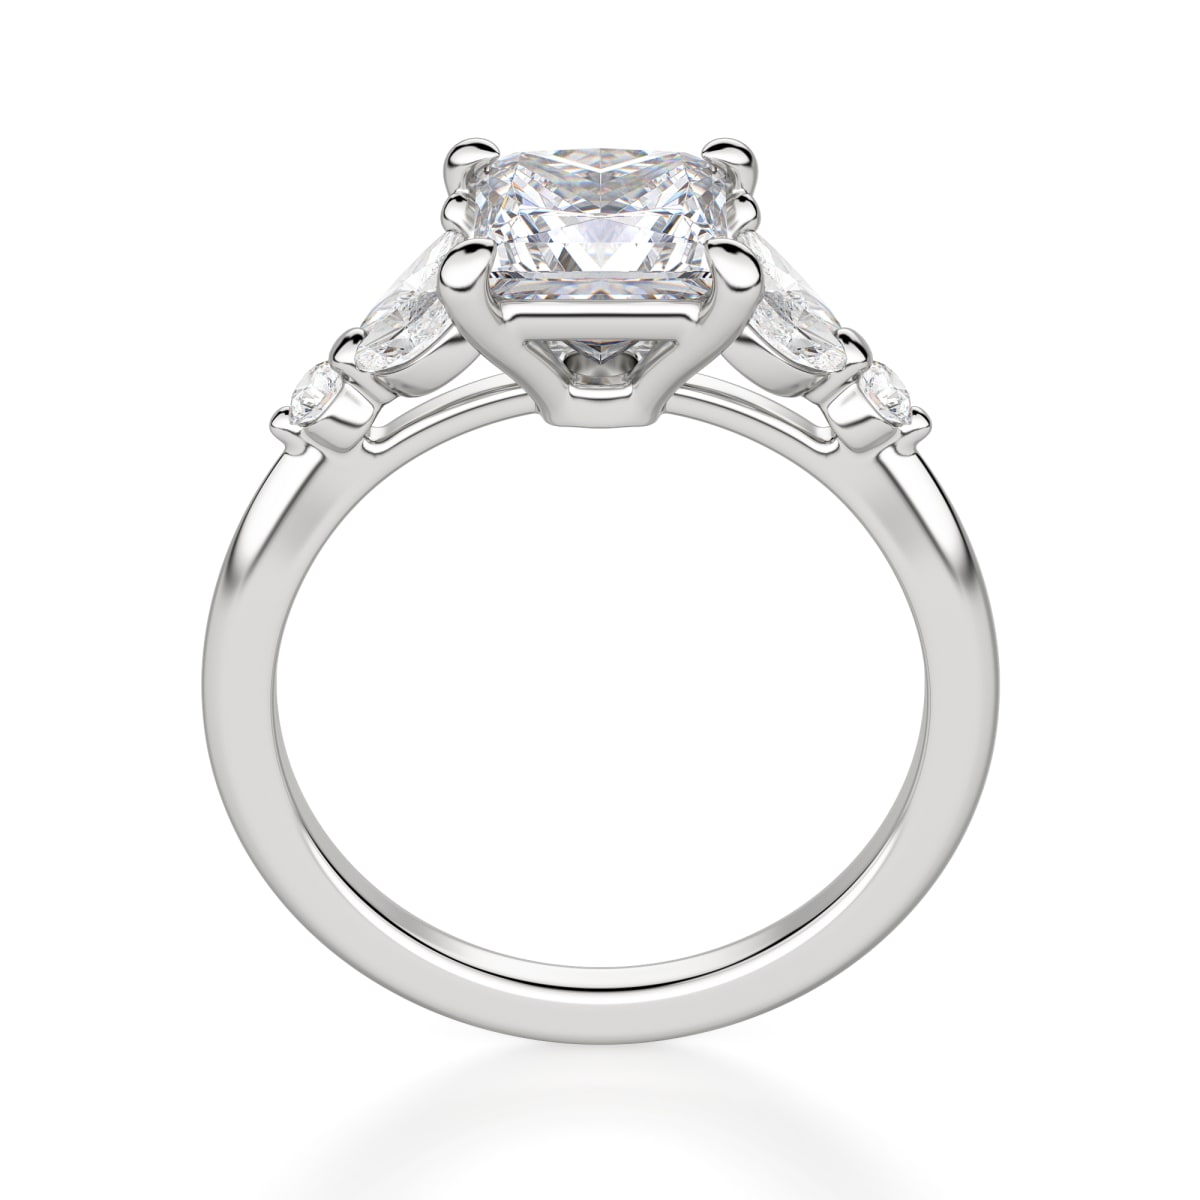 Princess Cut Diamond Rings Collection | Ornate Jewels